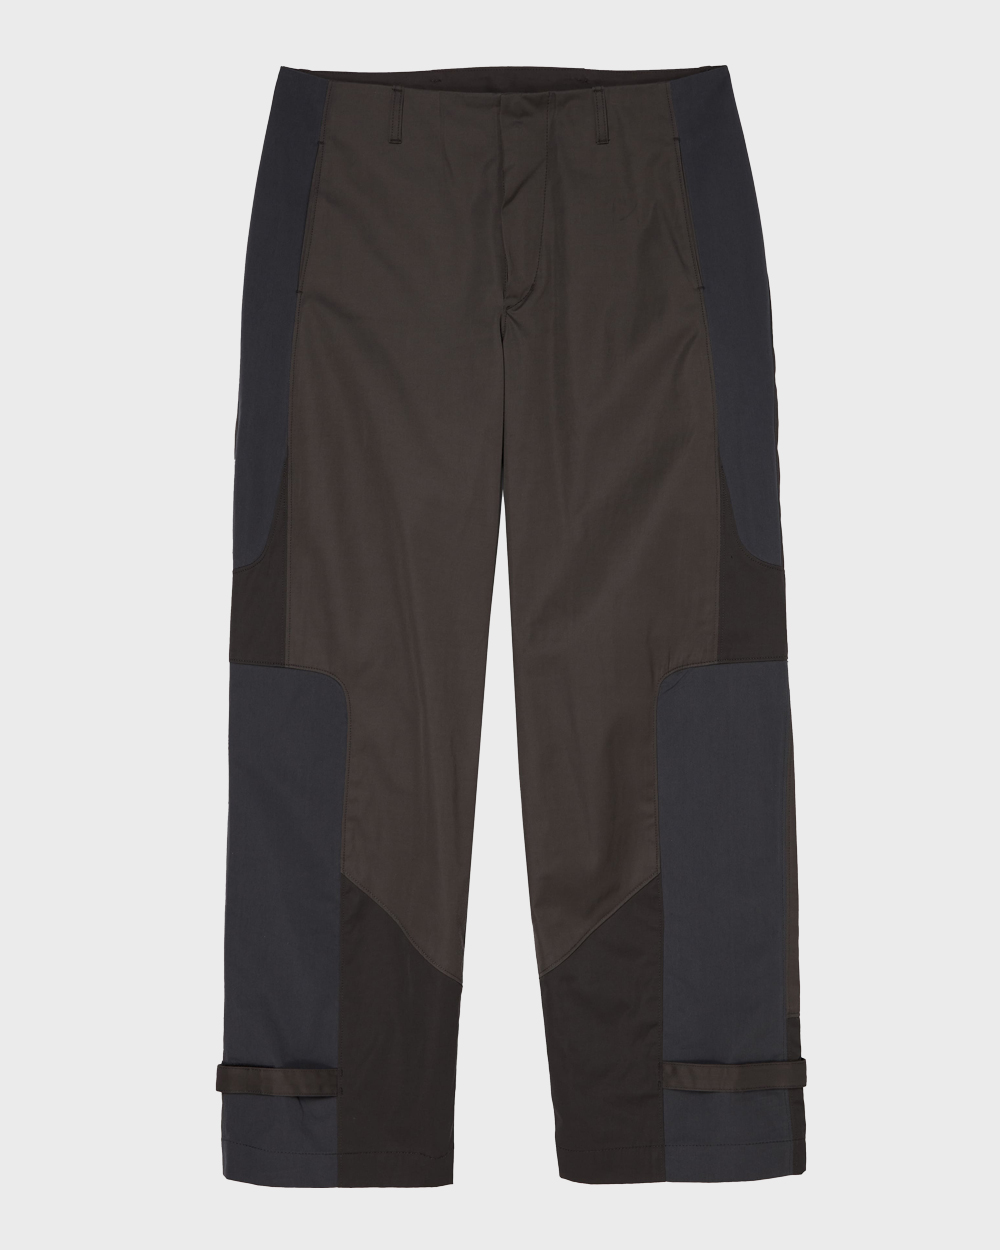 Nylon Combination Pants (Charcoal)